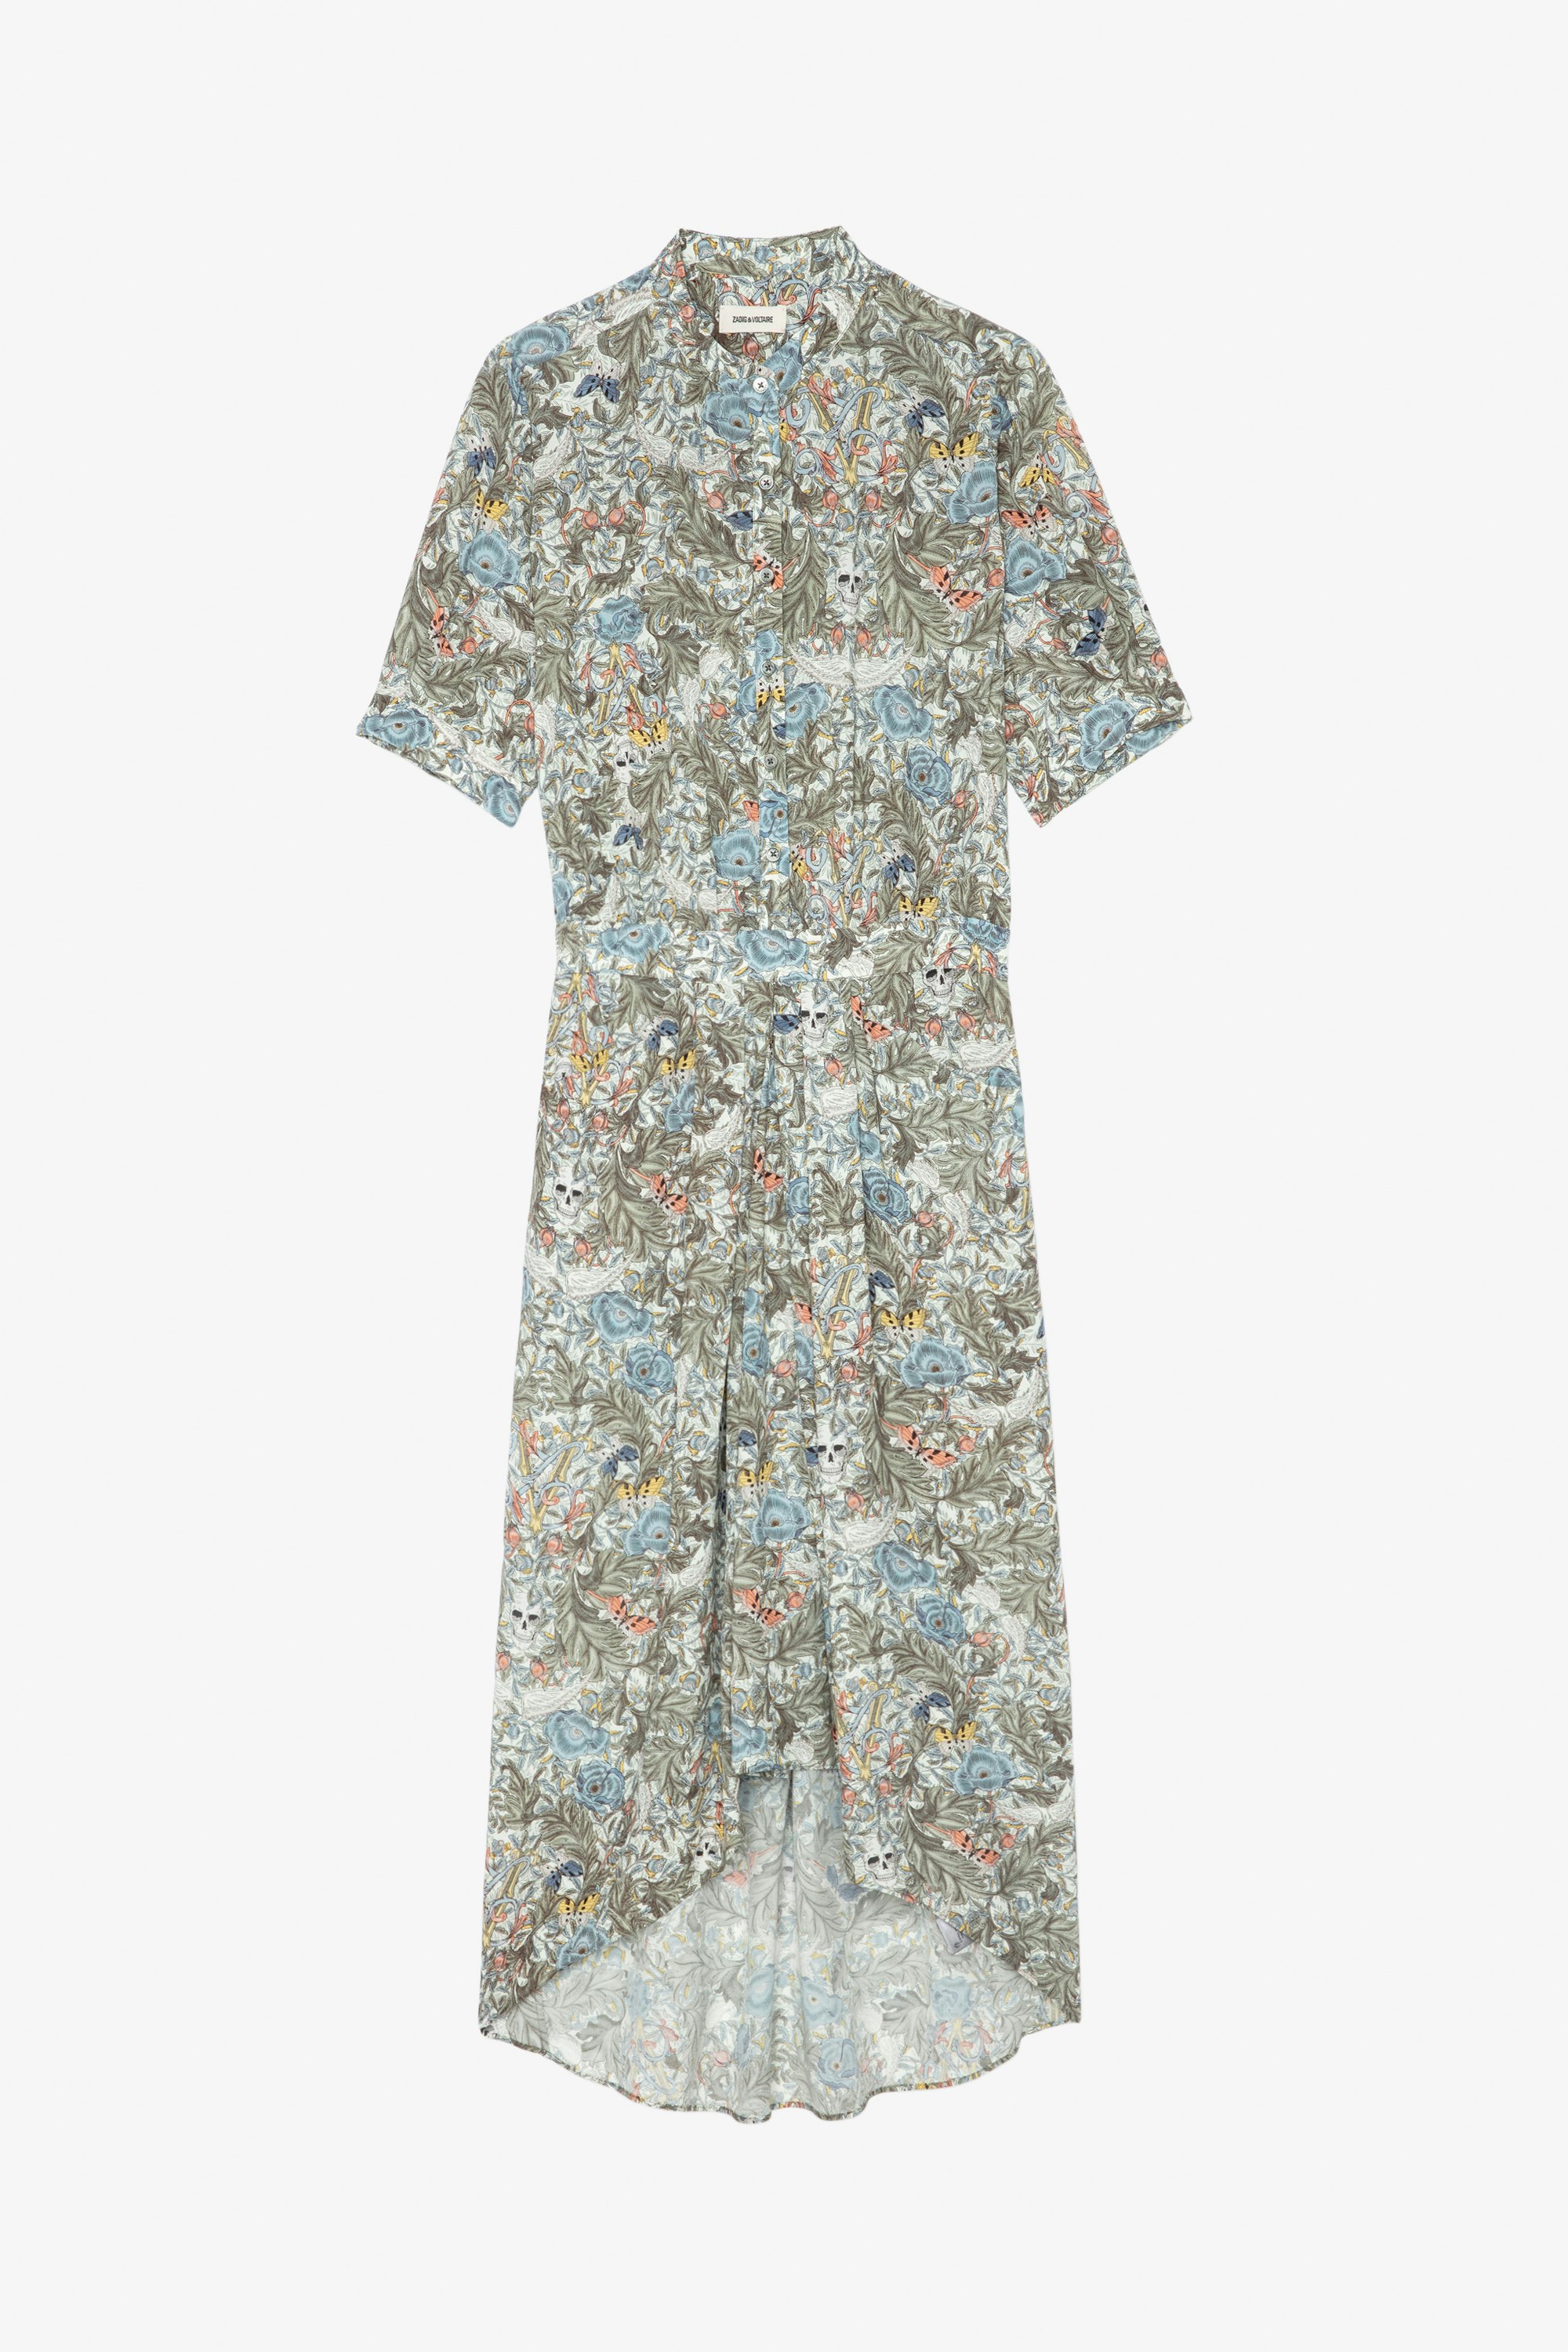 Rima Dress Women's mid-length khaki floral-print dress